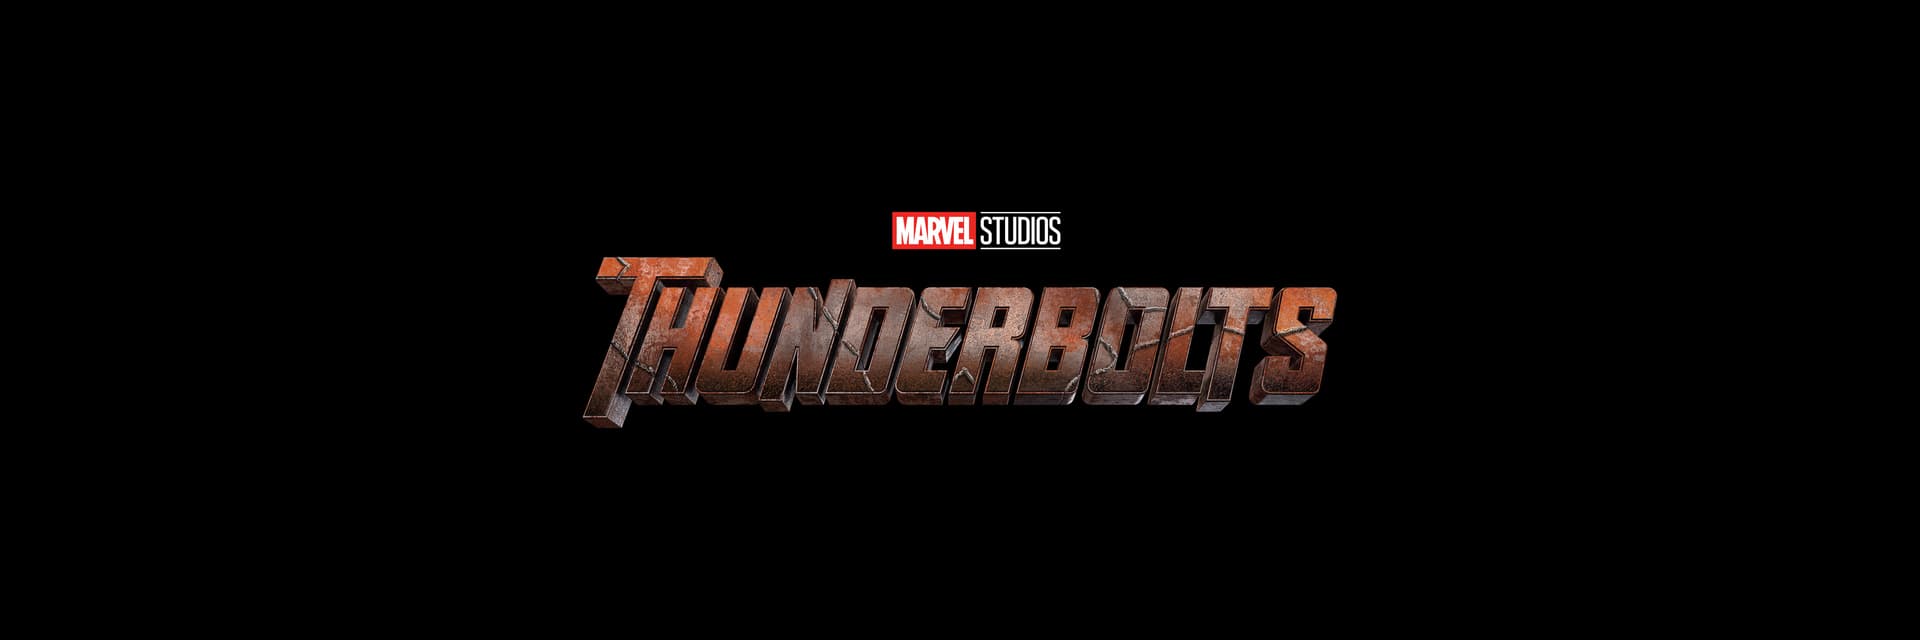 Marvel Studios' Thunderbolts Movie Logo on Black